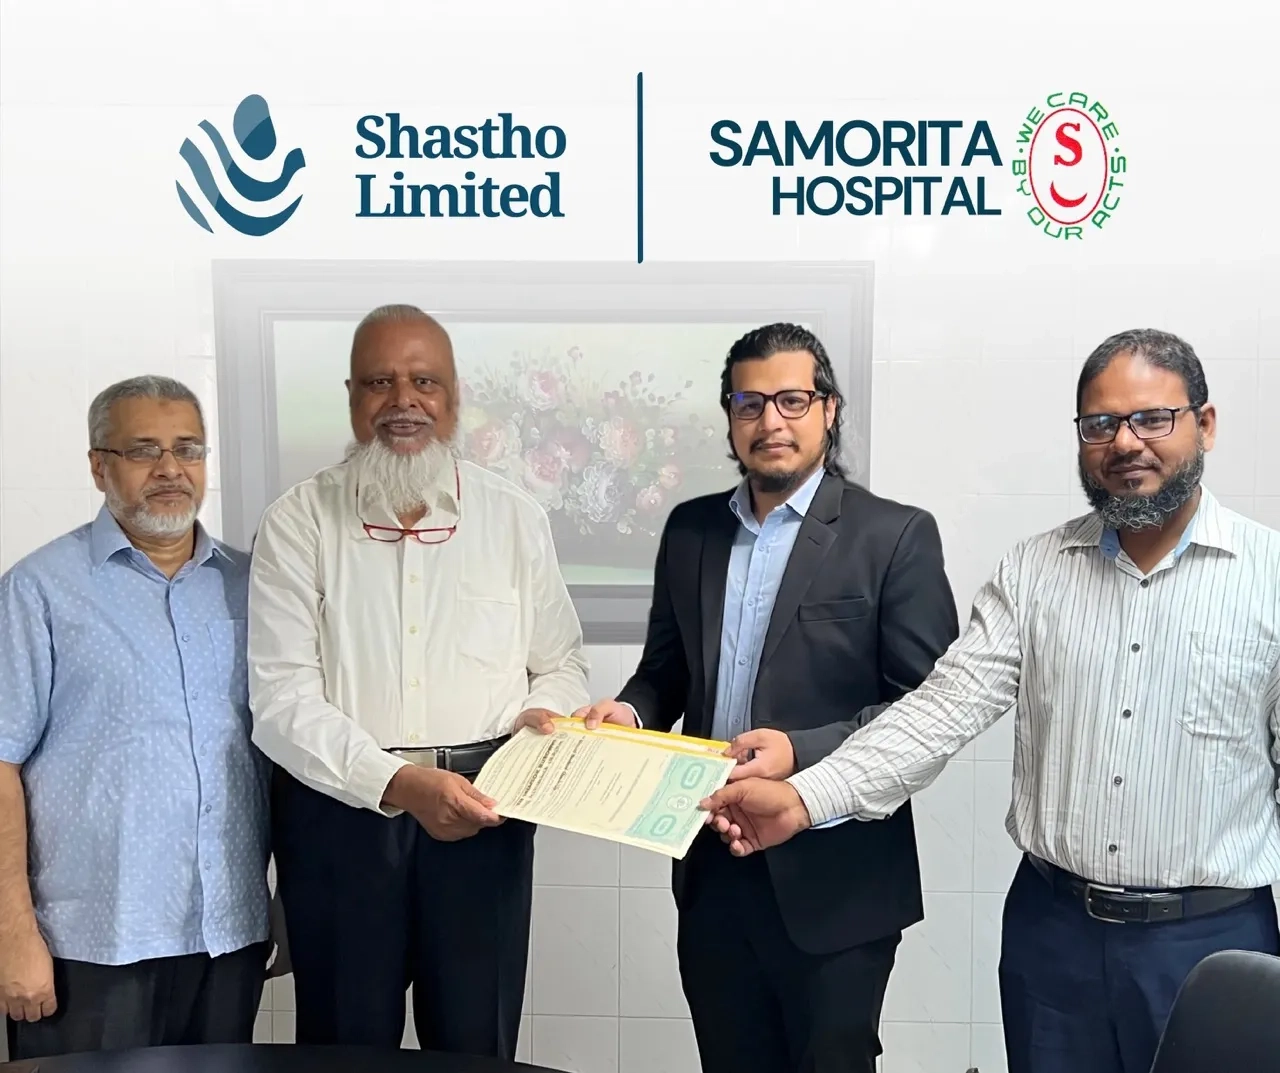 Partnership with Samorita Hospital